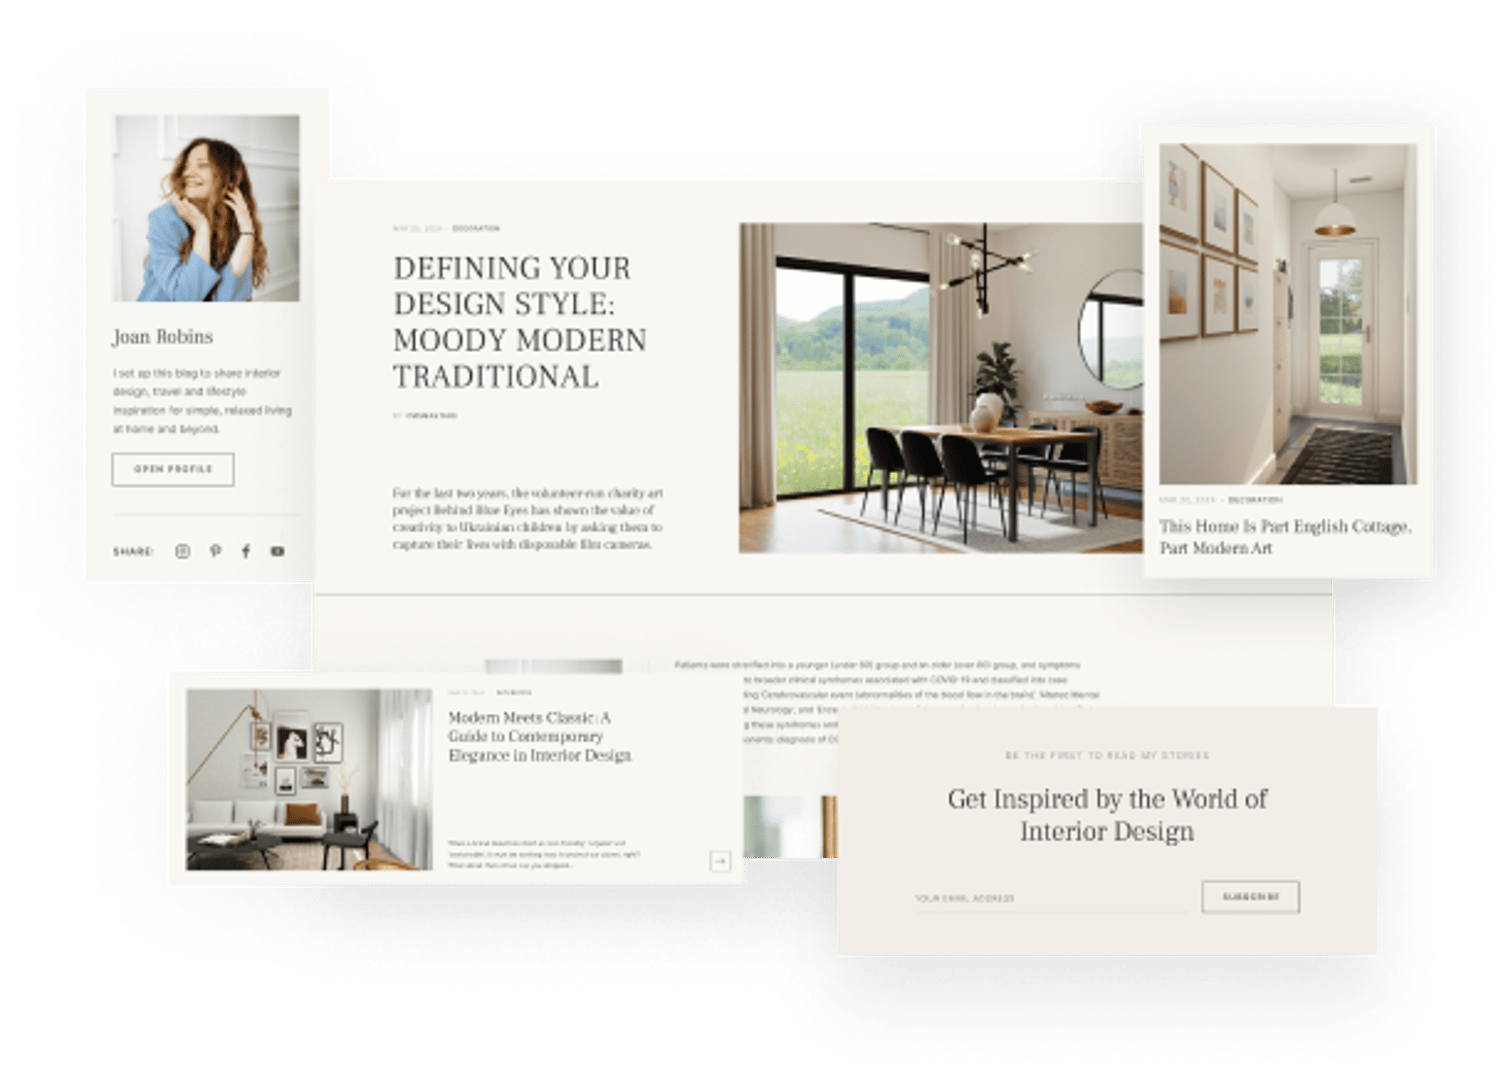 Interiocity - Home Decor Blog and Interior Design Magazine WordPress Theme - Blog Posts Layout | CMSMasters studio